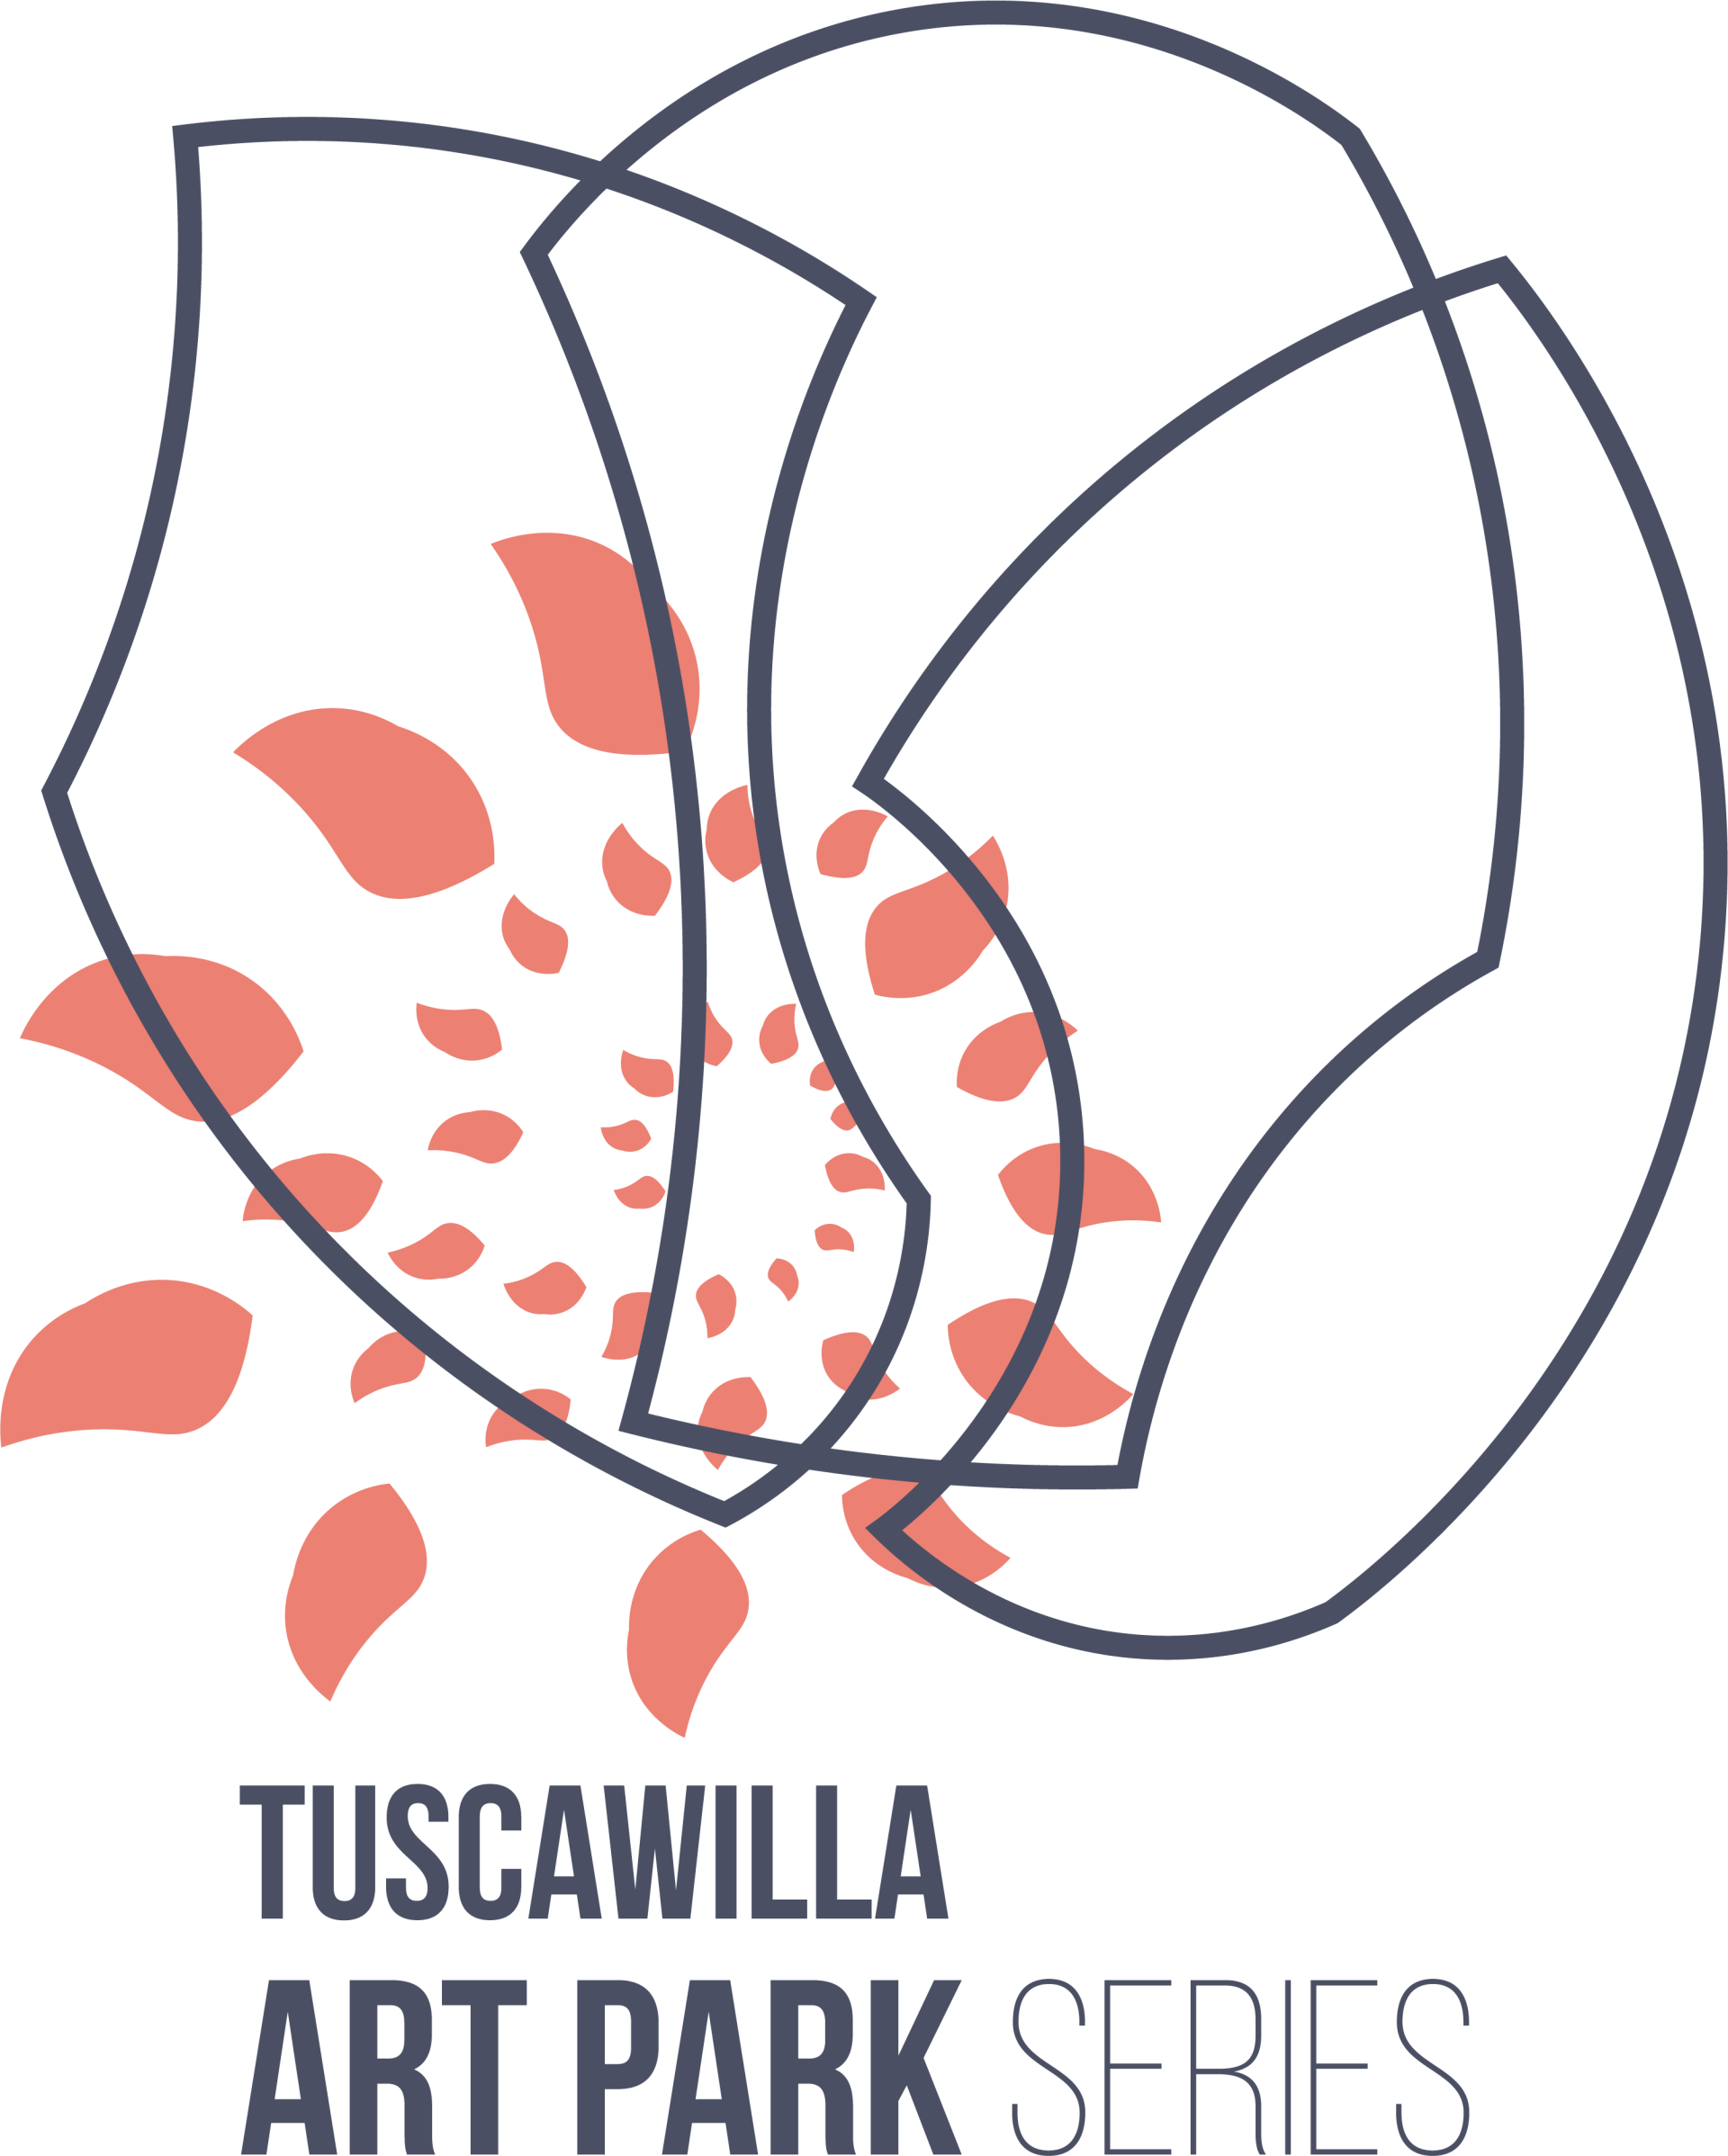 Tuscawilla Art Park Series logo